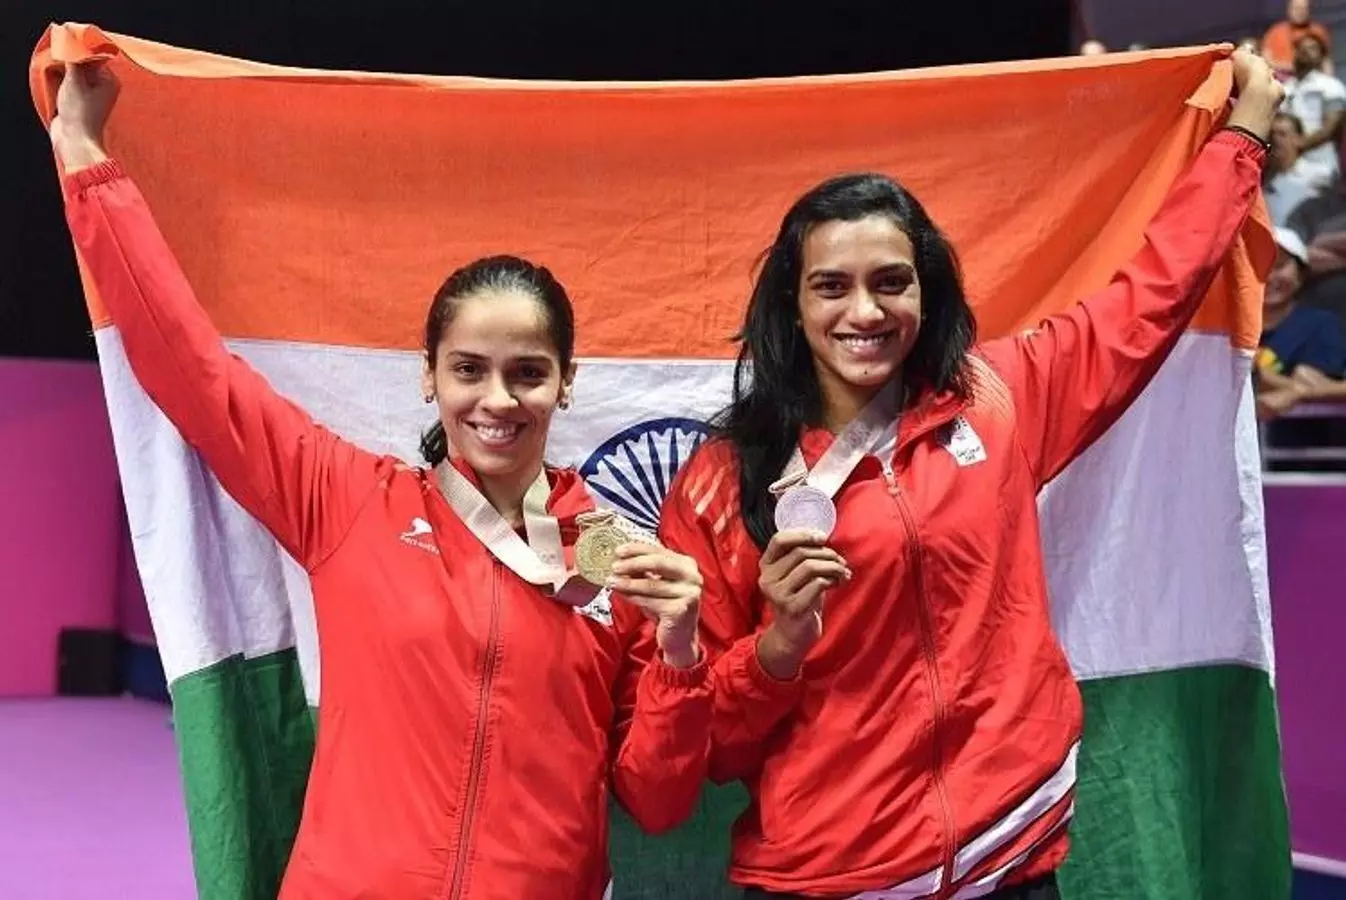 2012 London Olympics bronze medallist Saina Nehwal and 2016 Rio Games silver medallist PV Sindhu